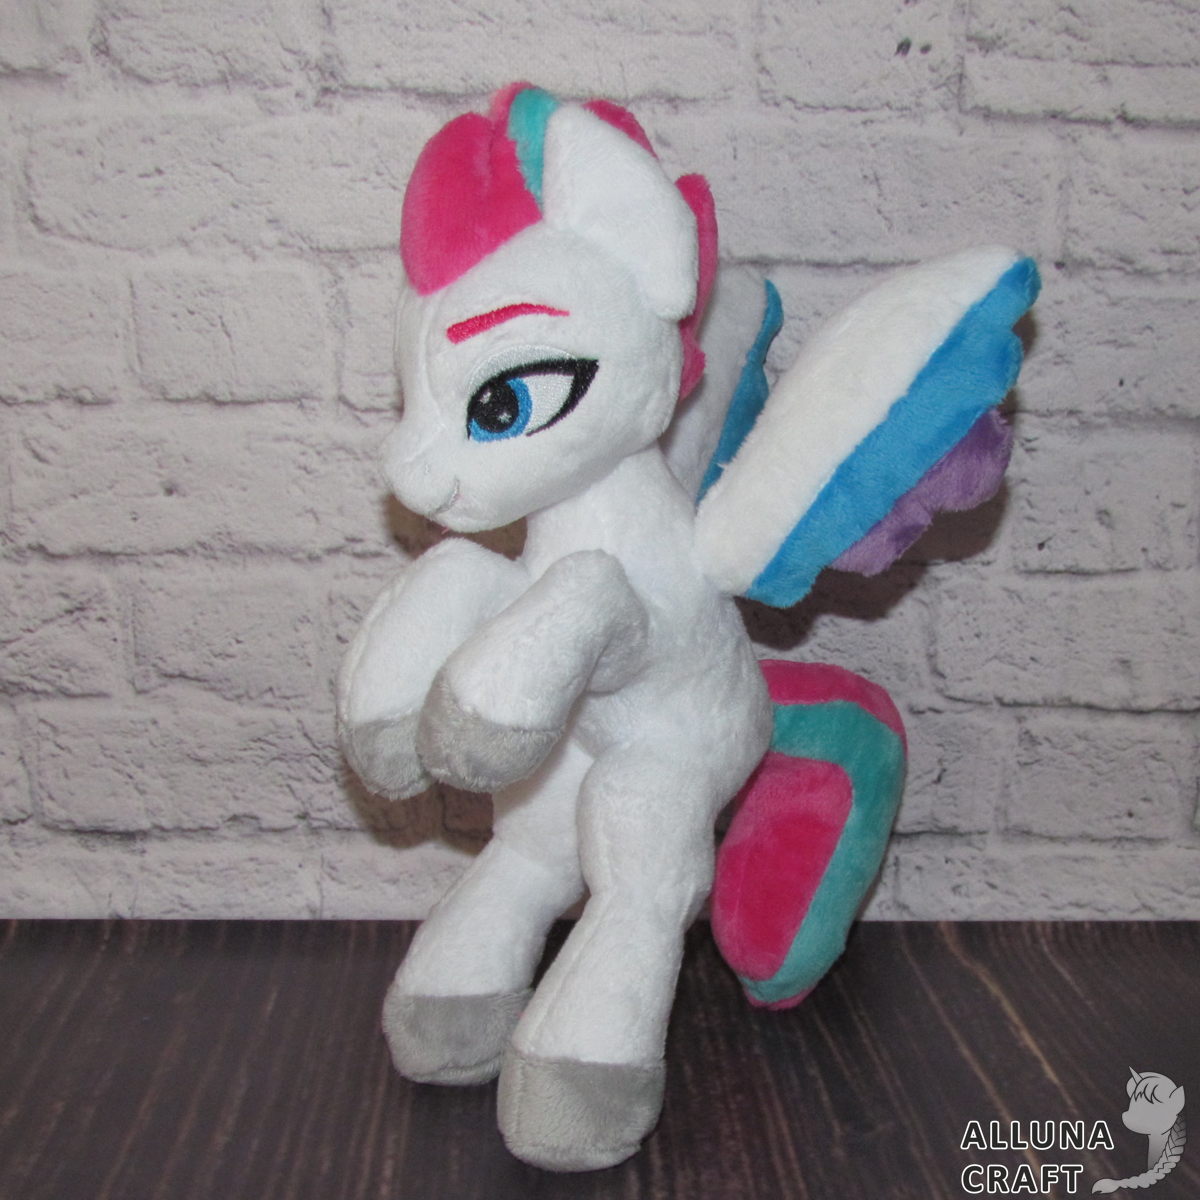 Zipp Storm My little pony plush toy - Inspire Uplift